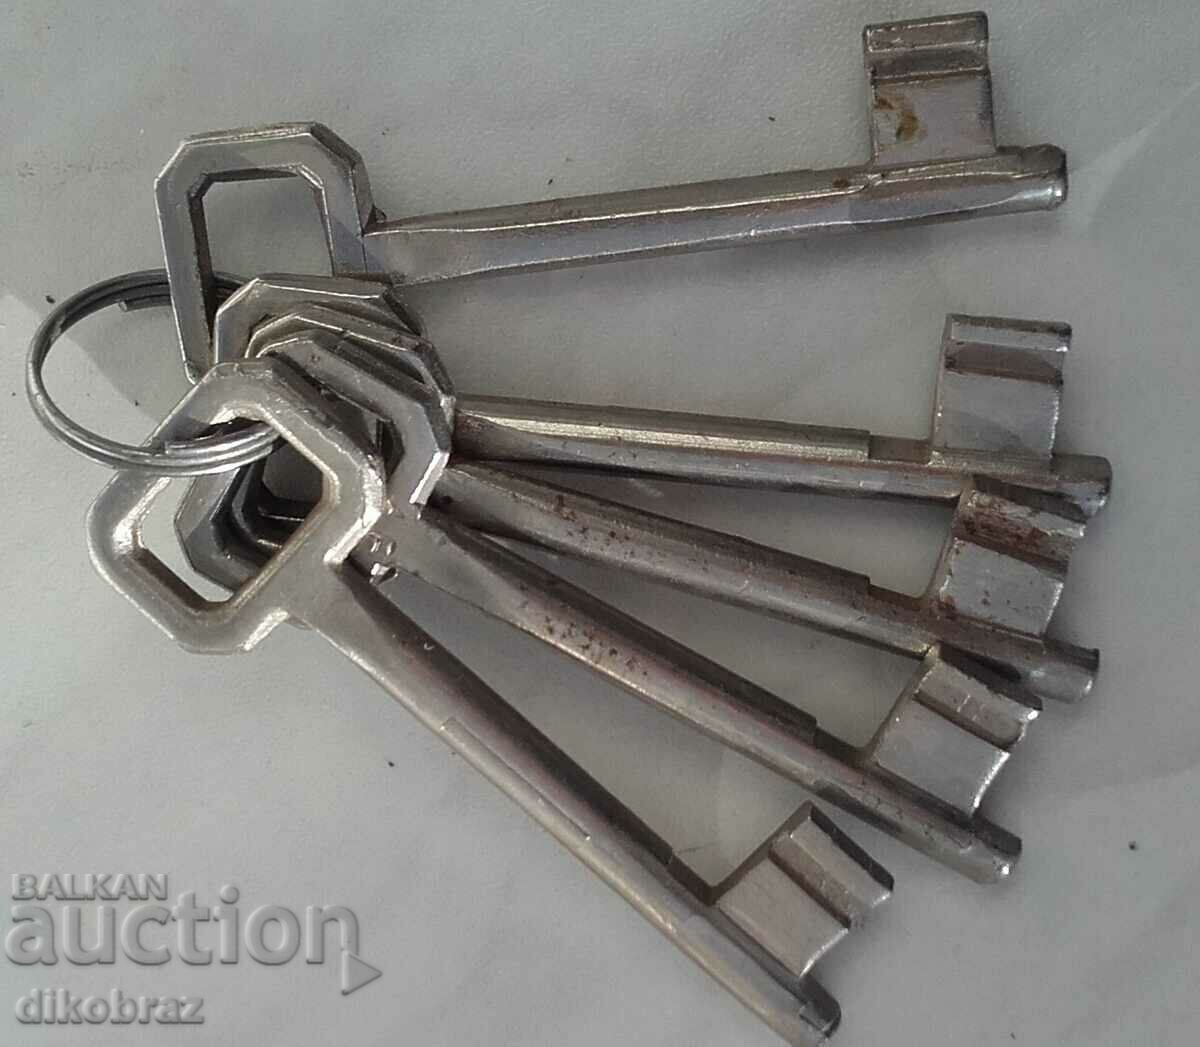 5 pieces of old soca keys for door locks